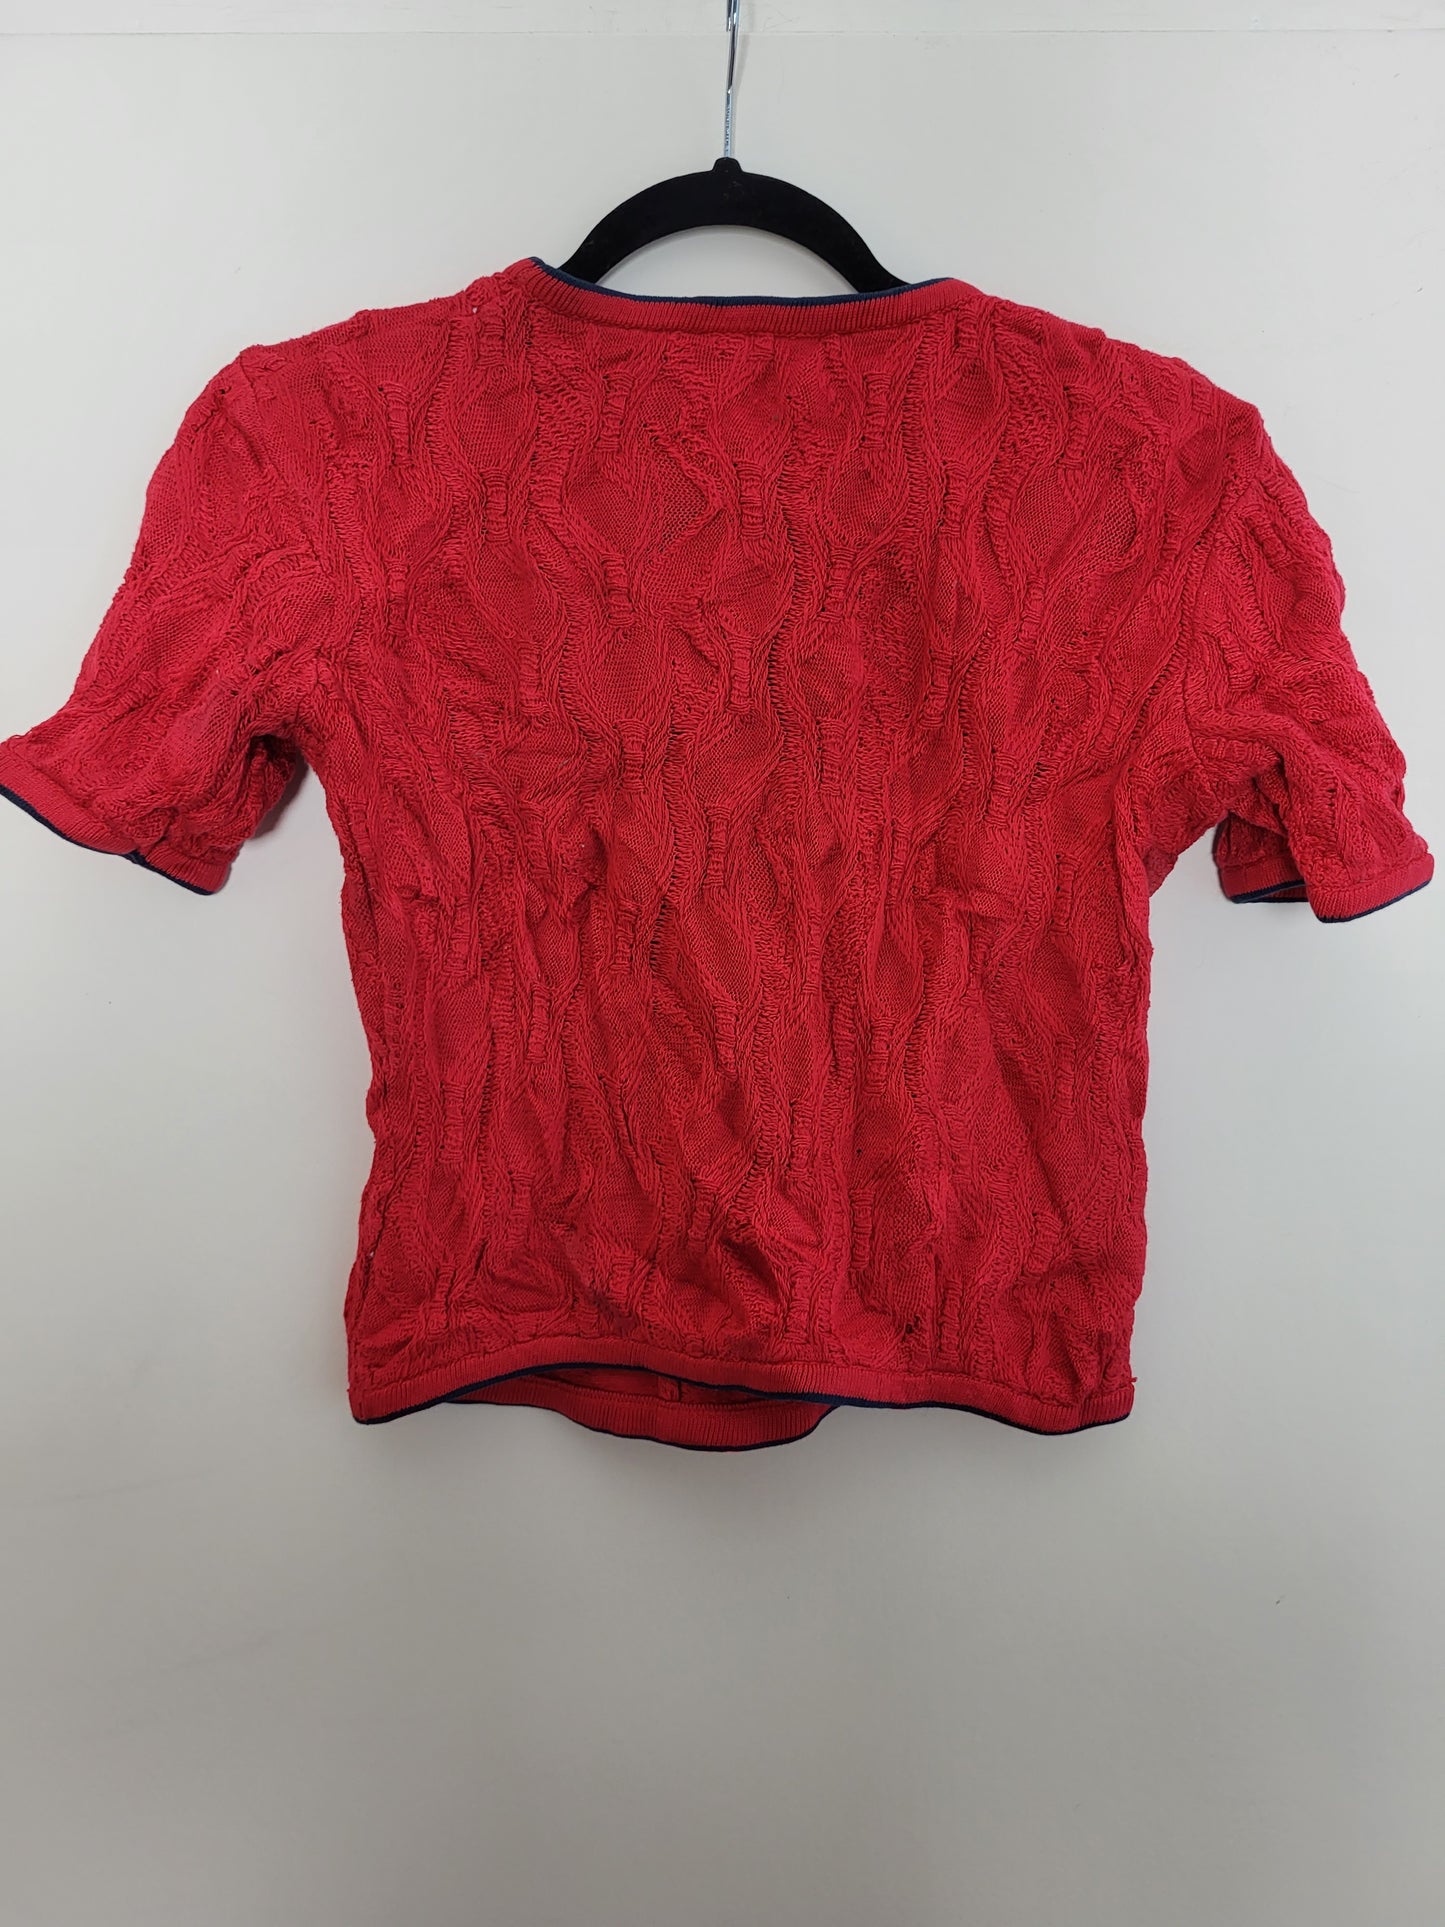 COOGI Basic - Pullover - Knit - Vintage Australia - Rot - Kinder - S